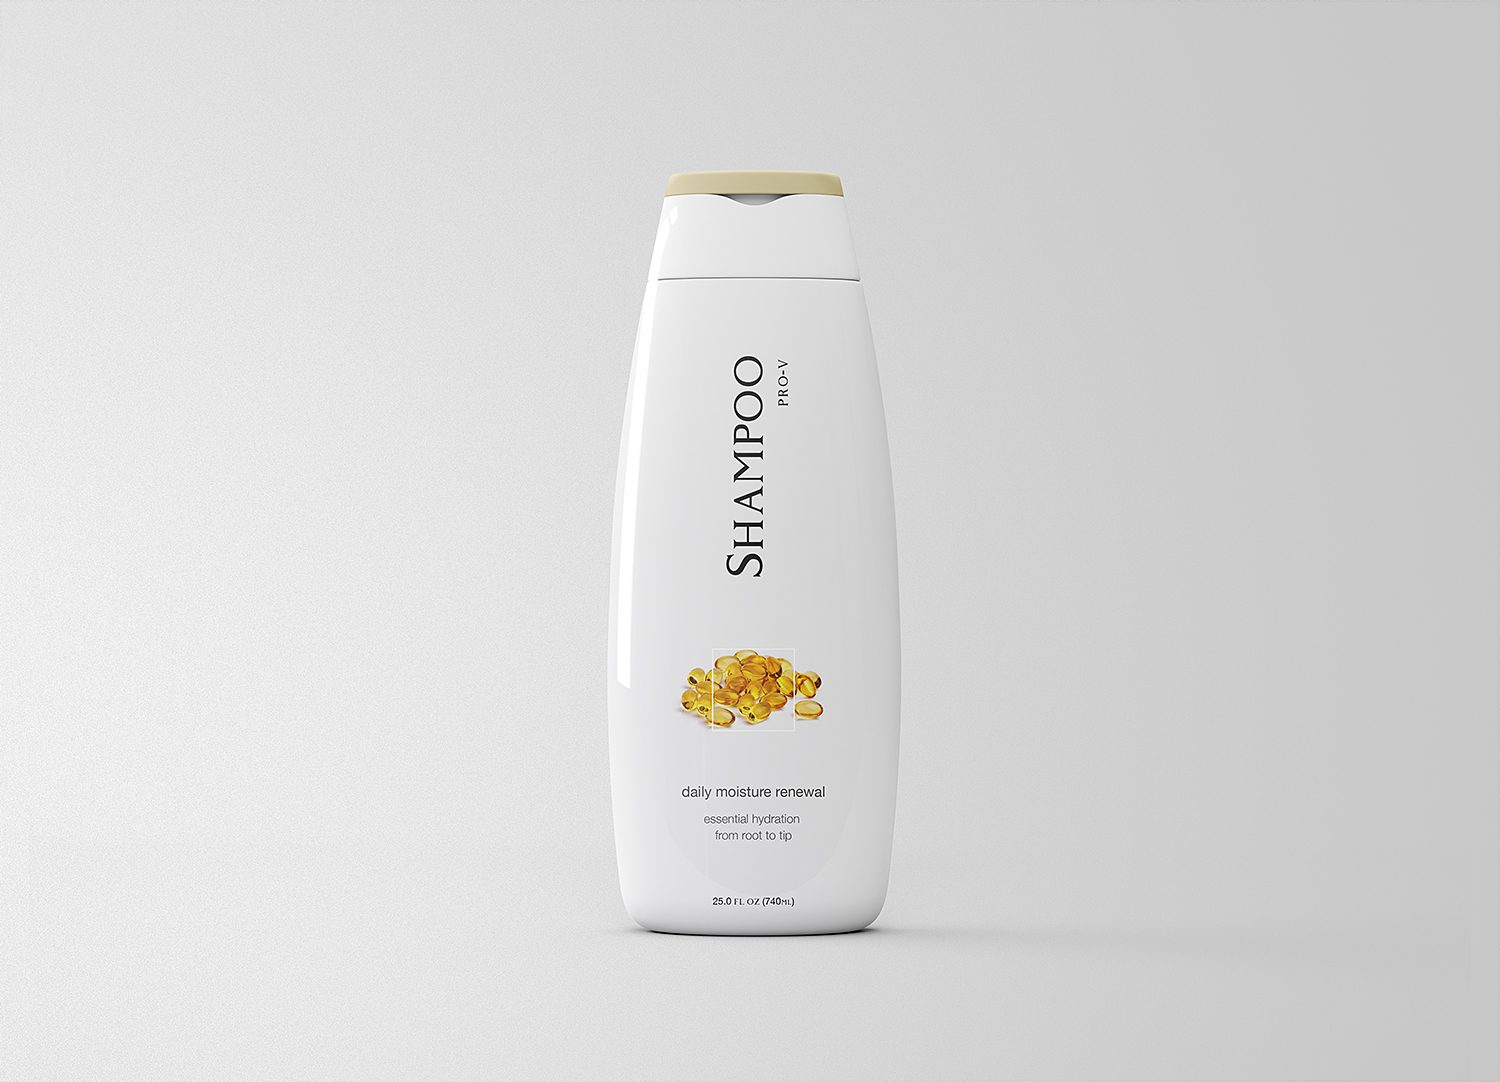 Shampoo Bottle Packaging